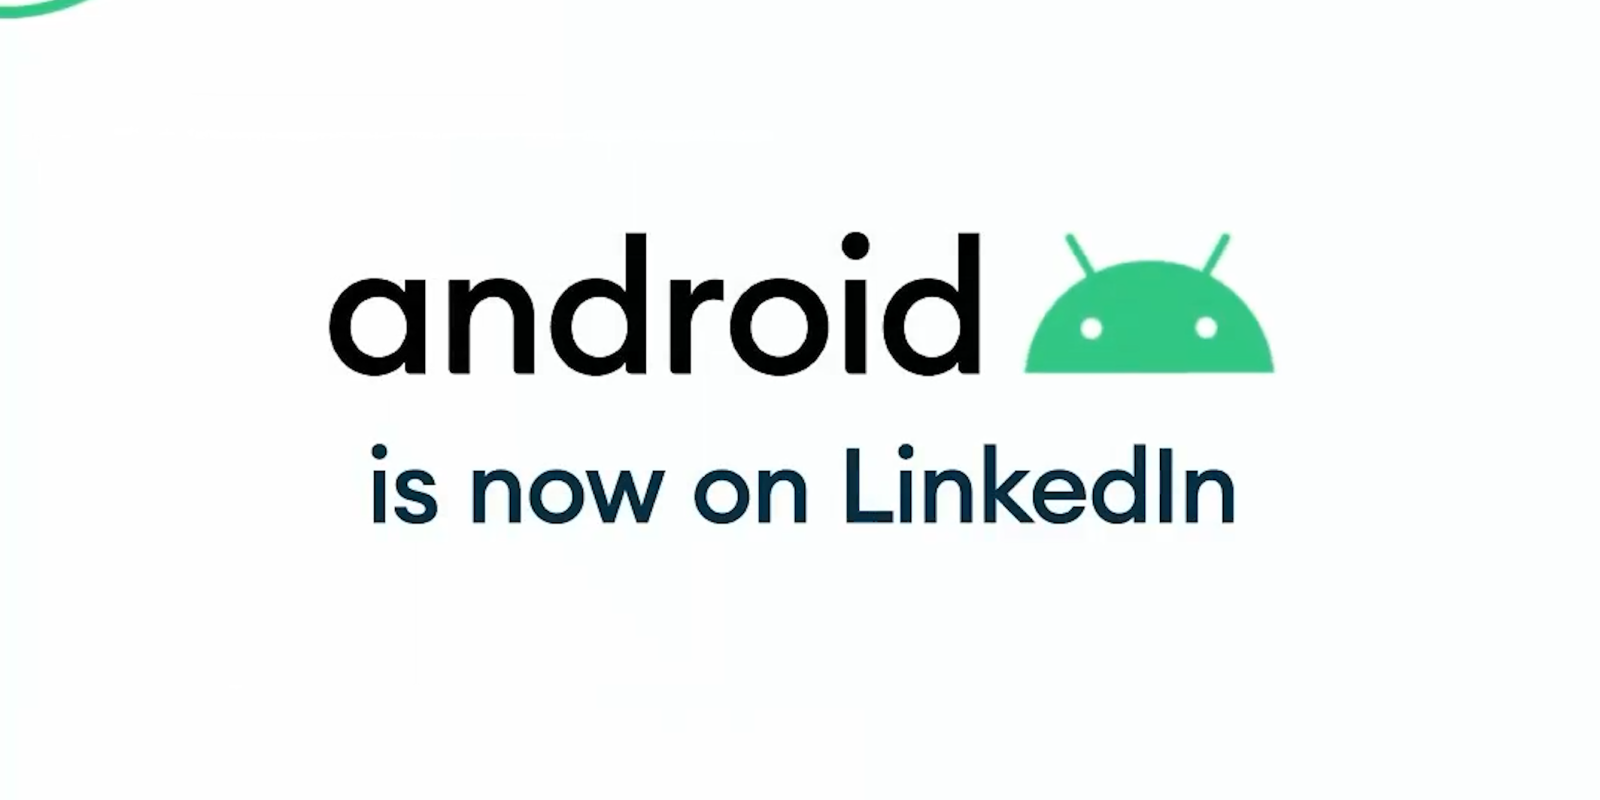 Android on LinkedIn